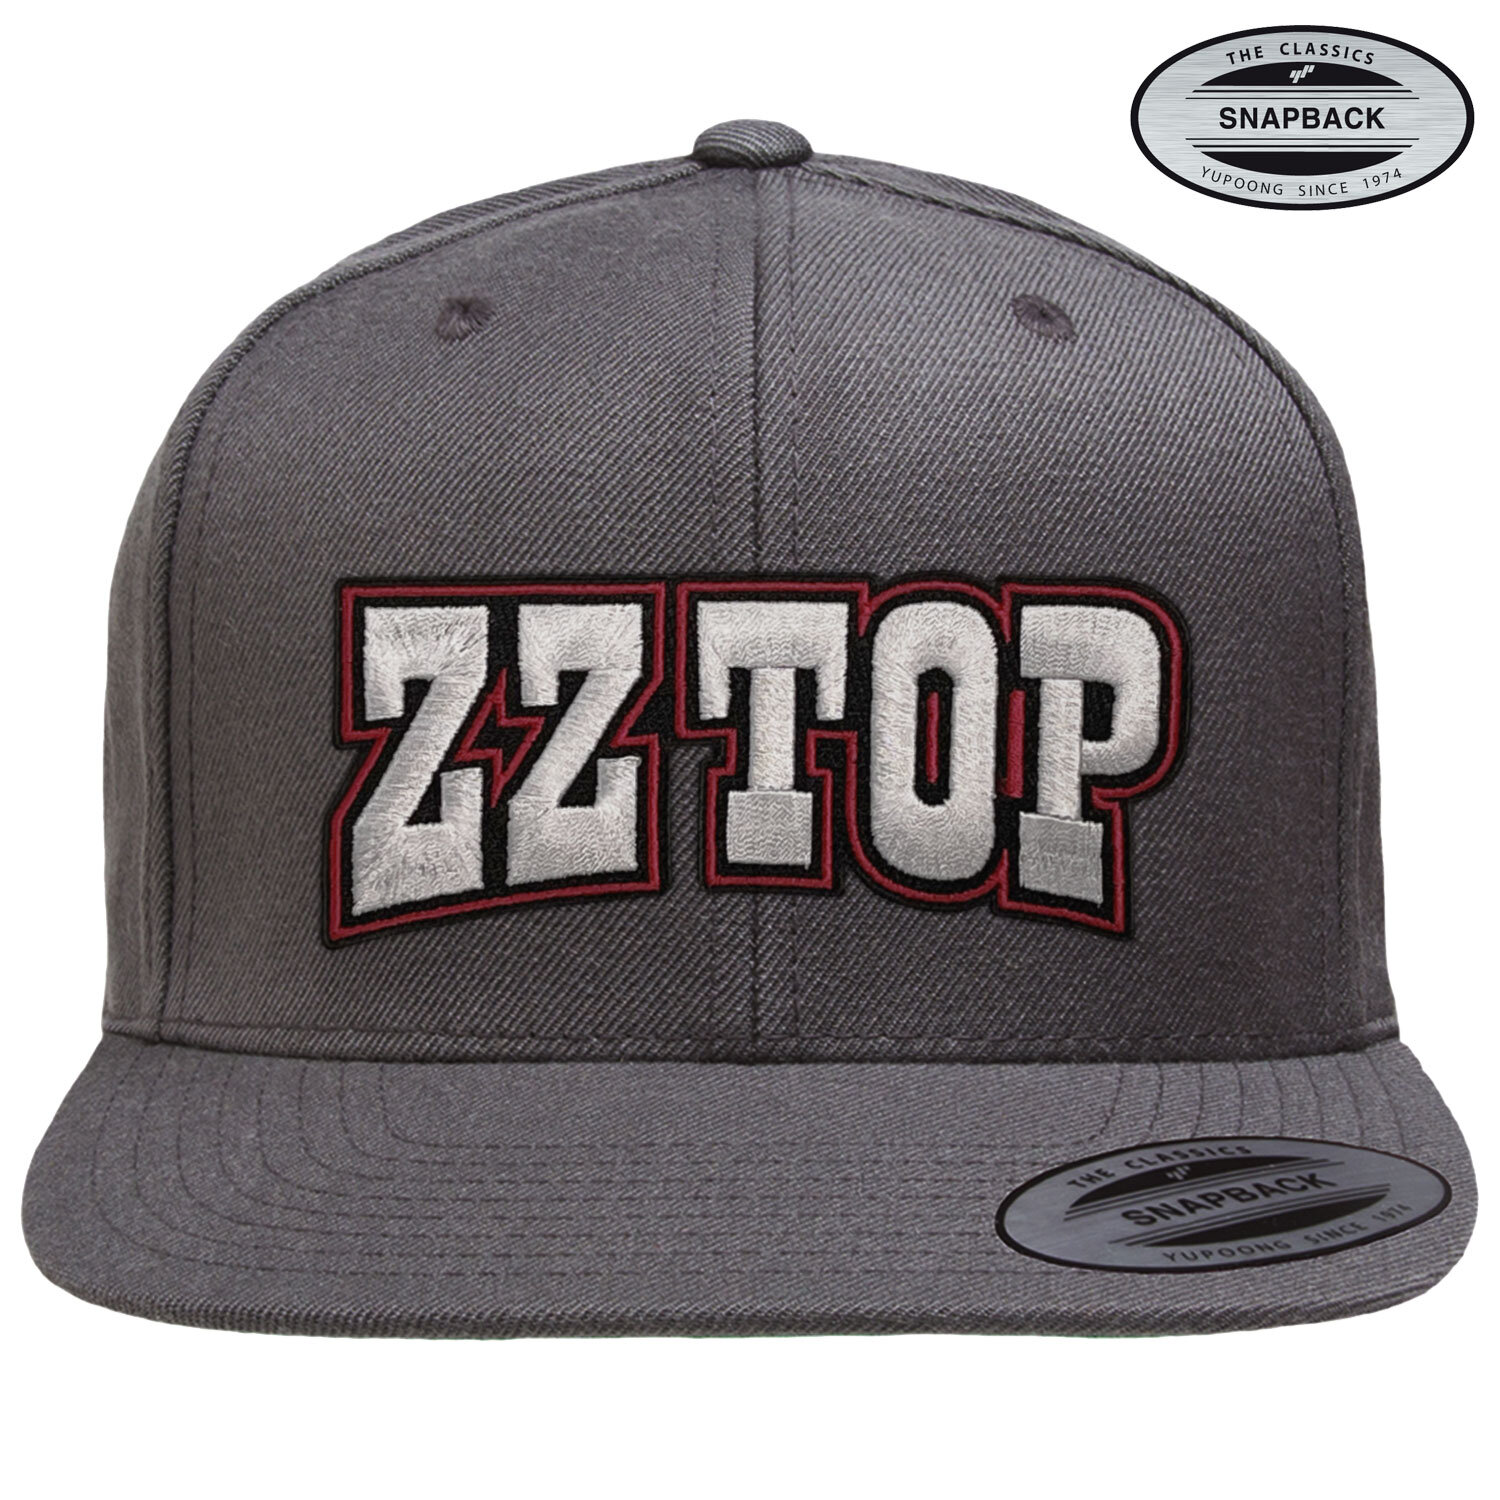 ZZ-TOP Premium Snapback Cap